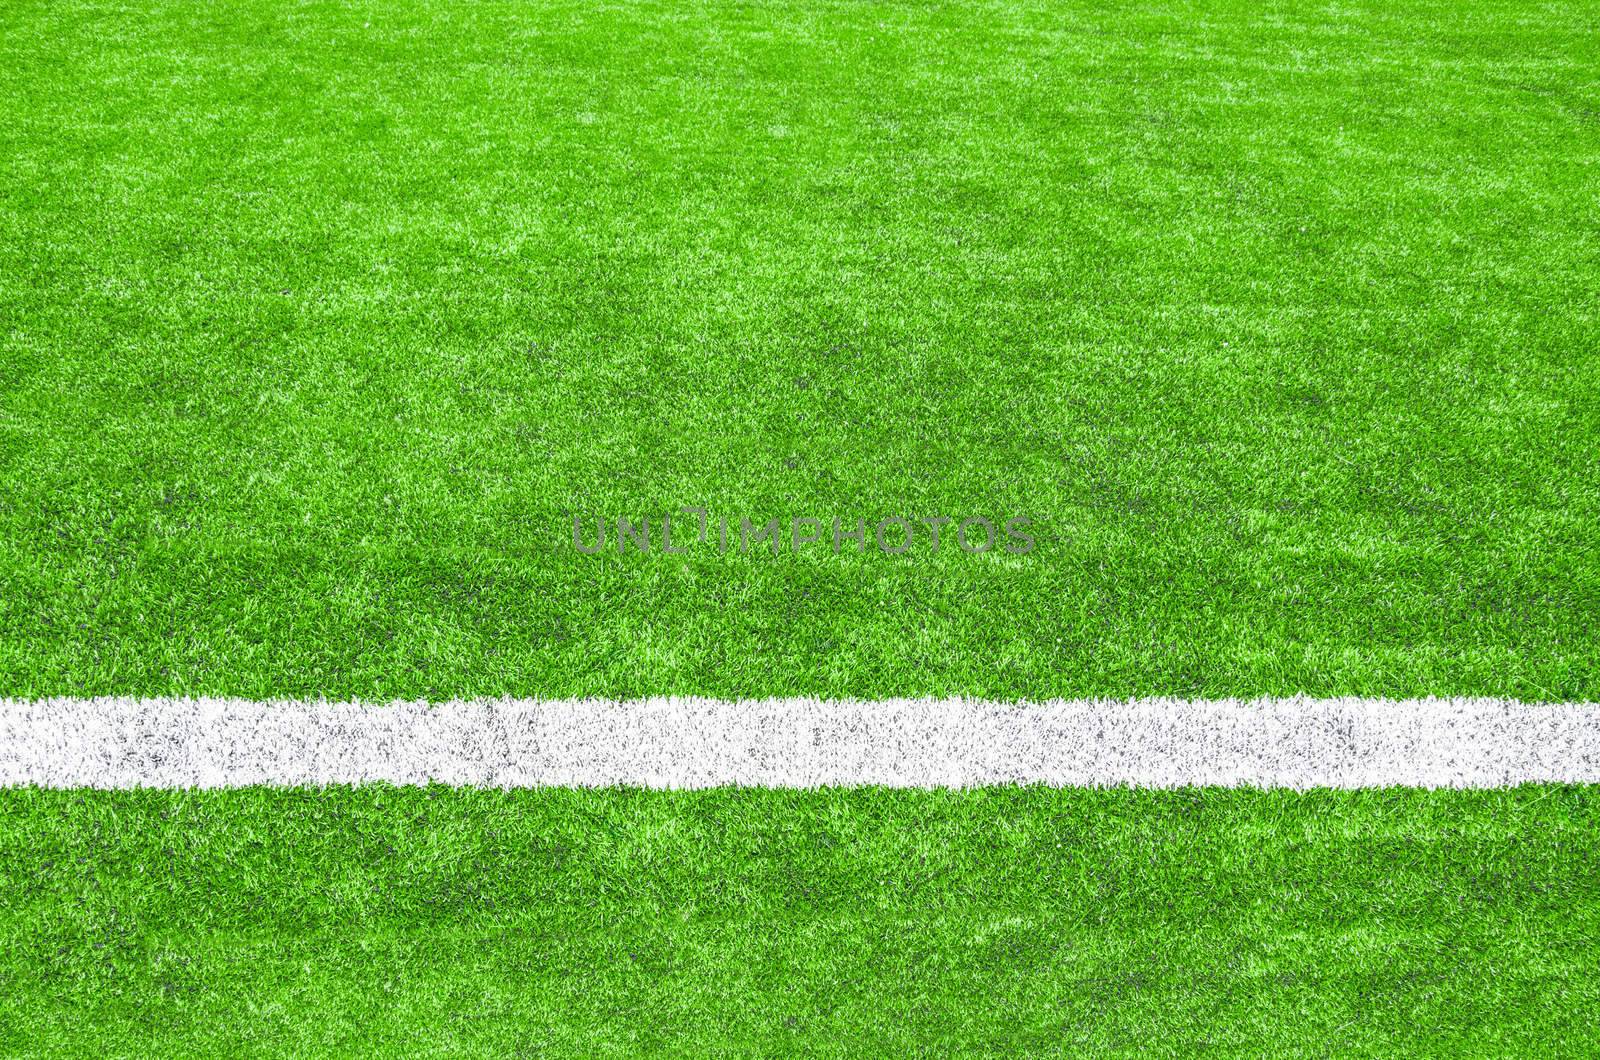 White stripe on the green soccer field.